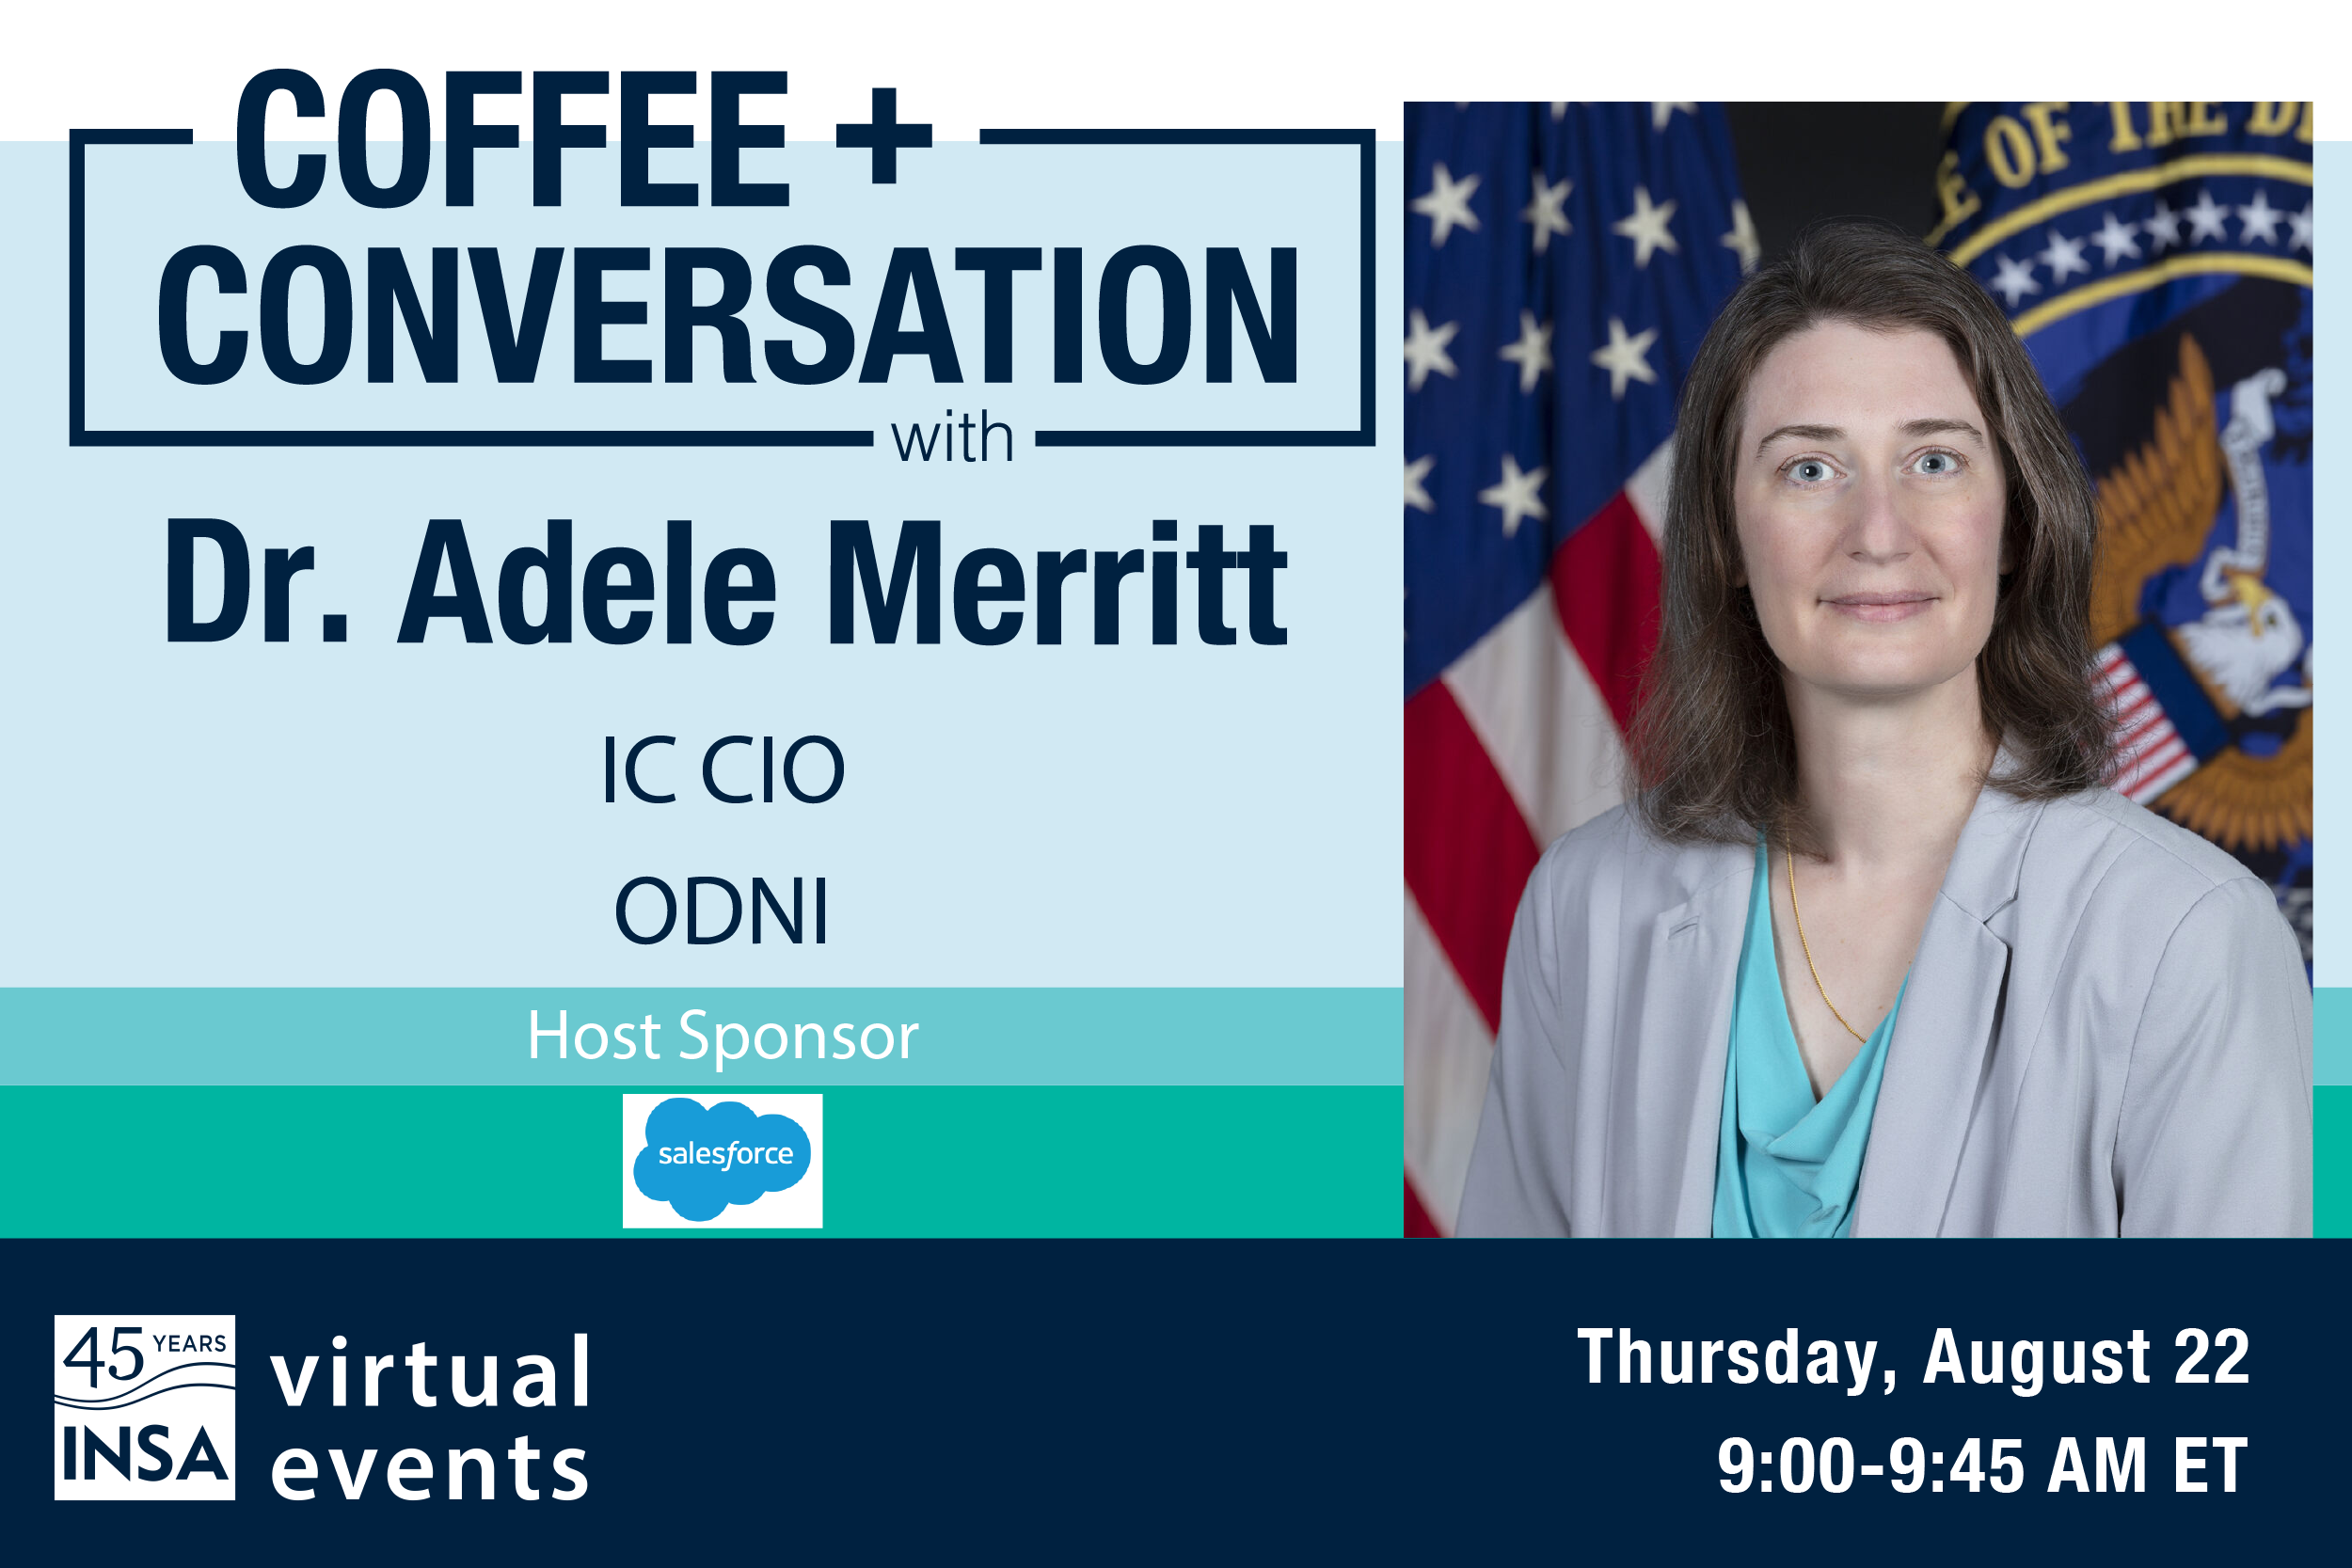 INSA's Coffee & Conversation with Dr. Adele Merritt